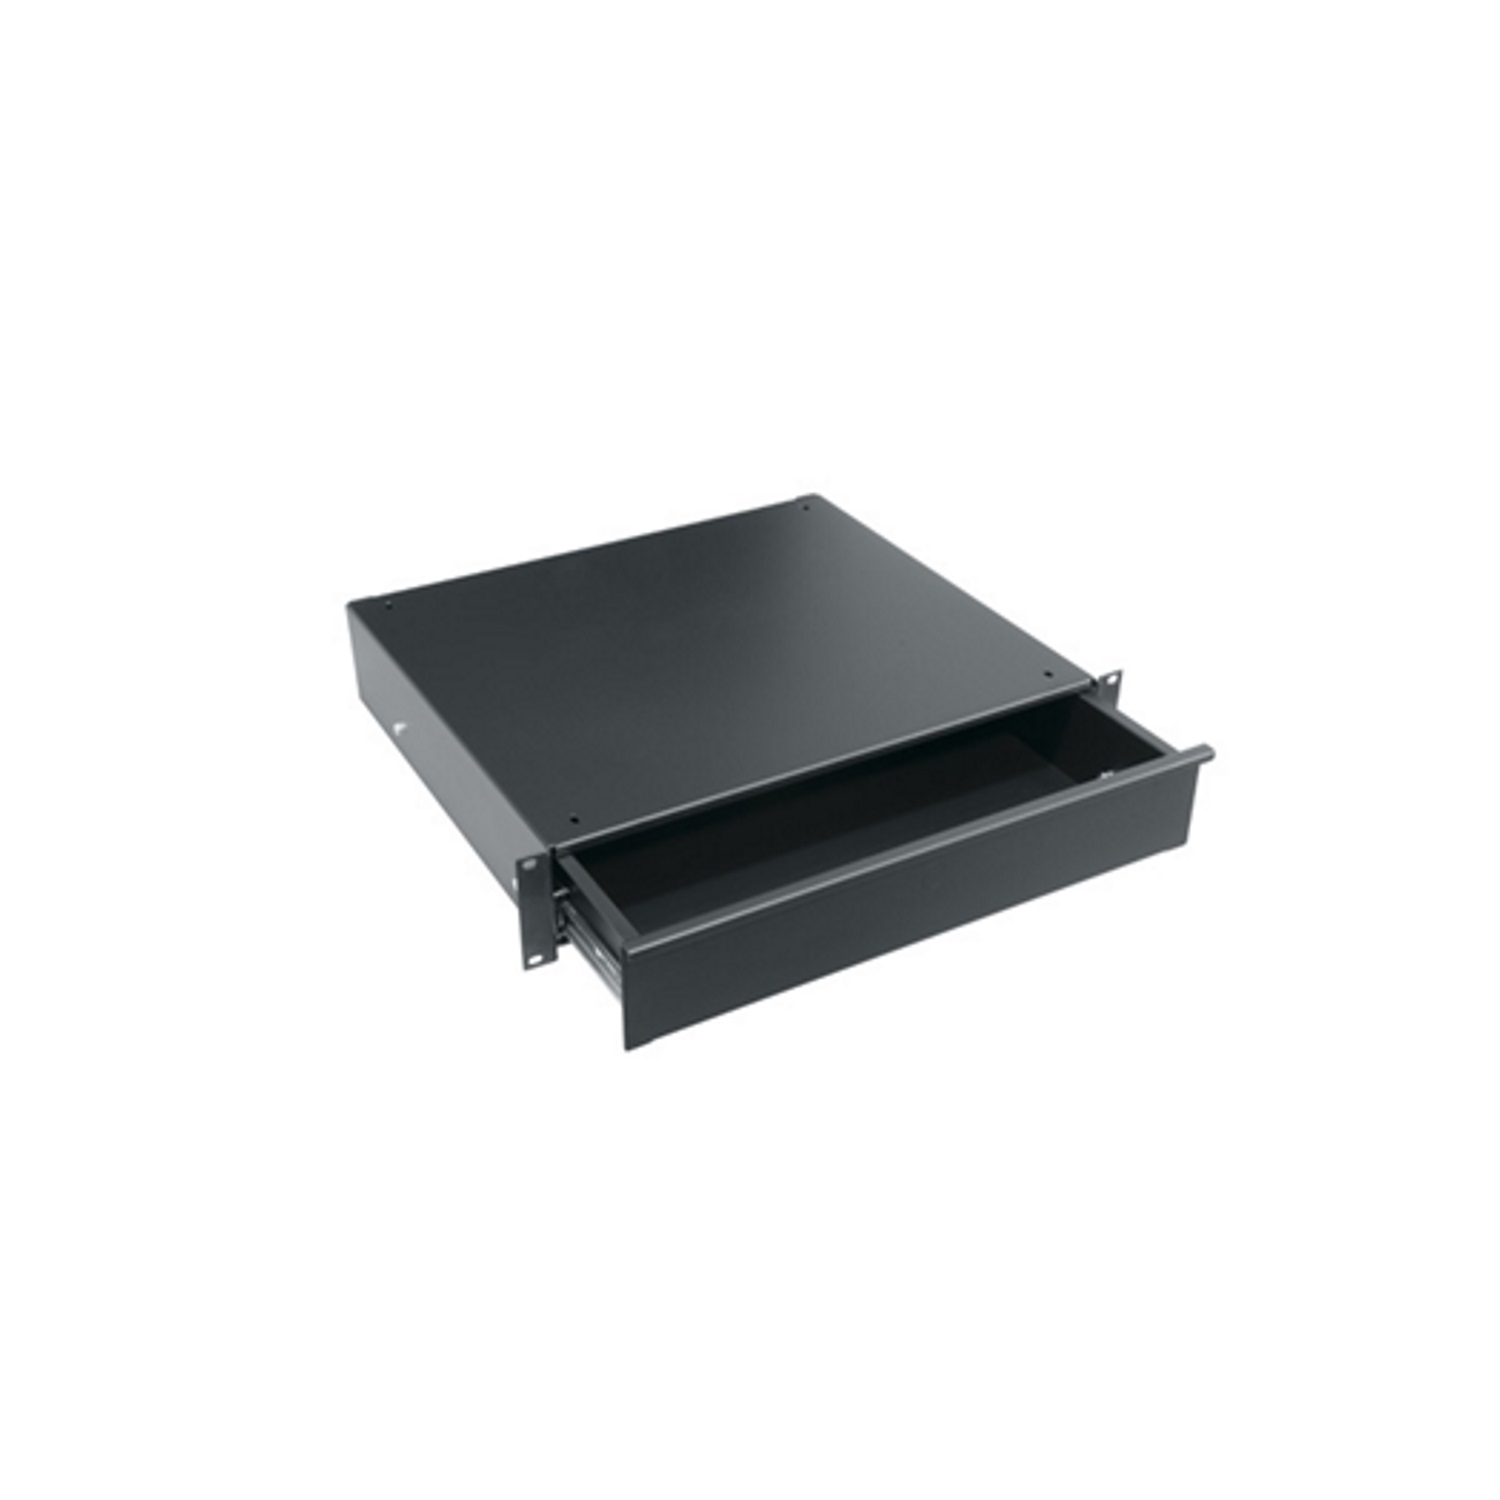 UD2 rack drawer, black